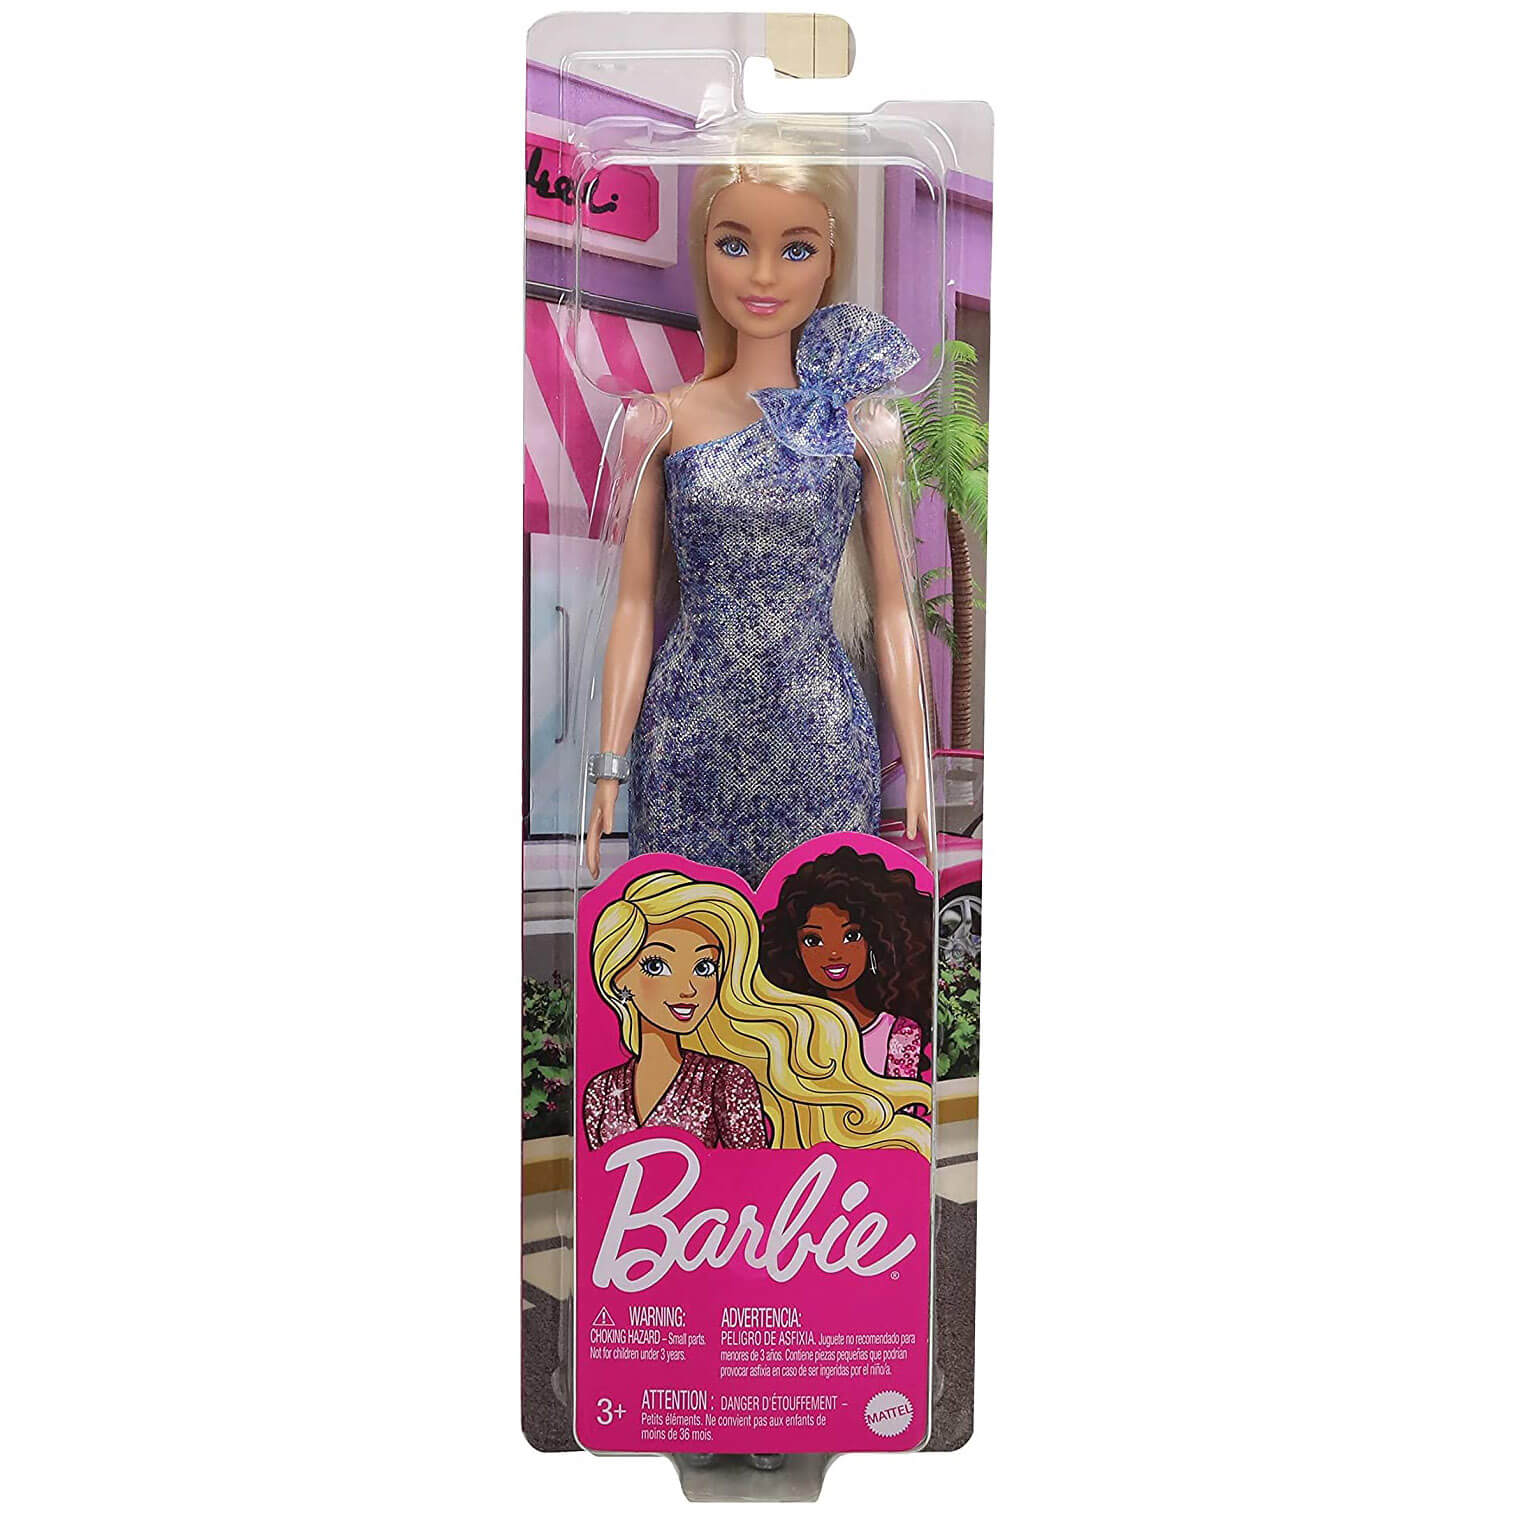 Barbie Doll with Blonde Hair Blue Eyes & Short Blue Sequins Dress